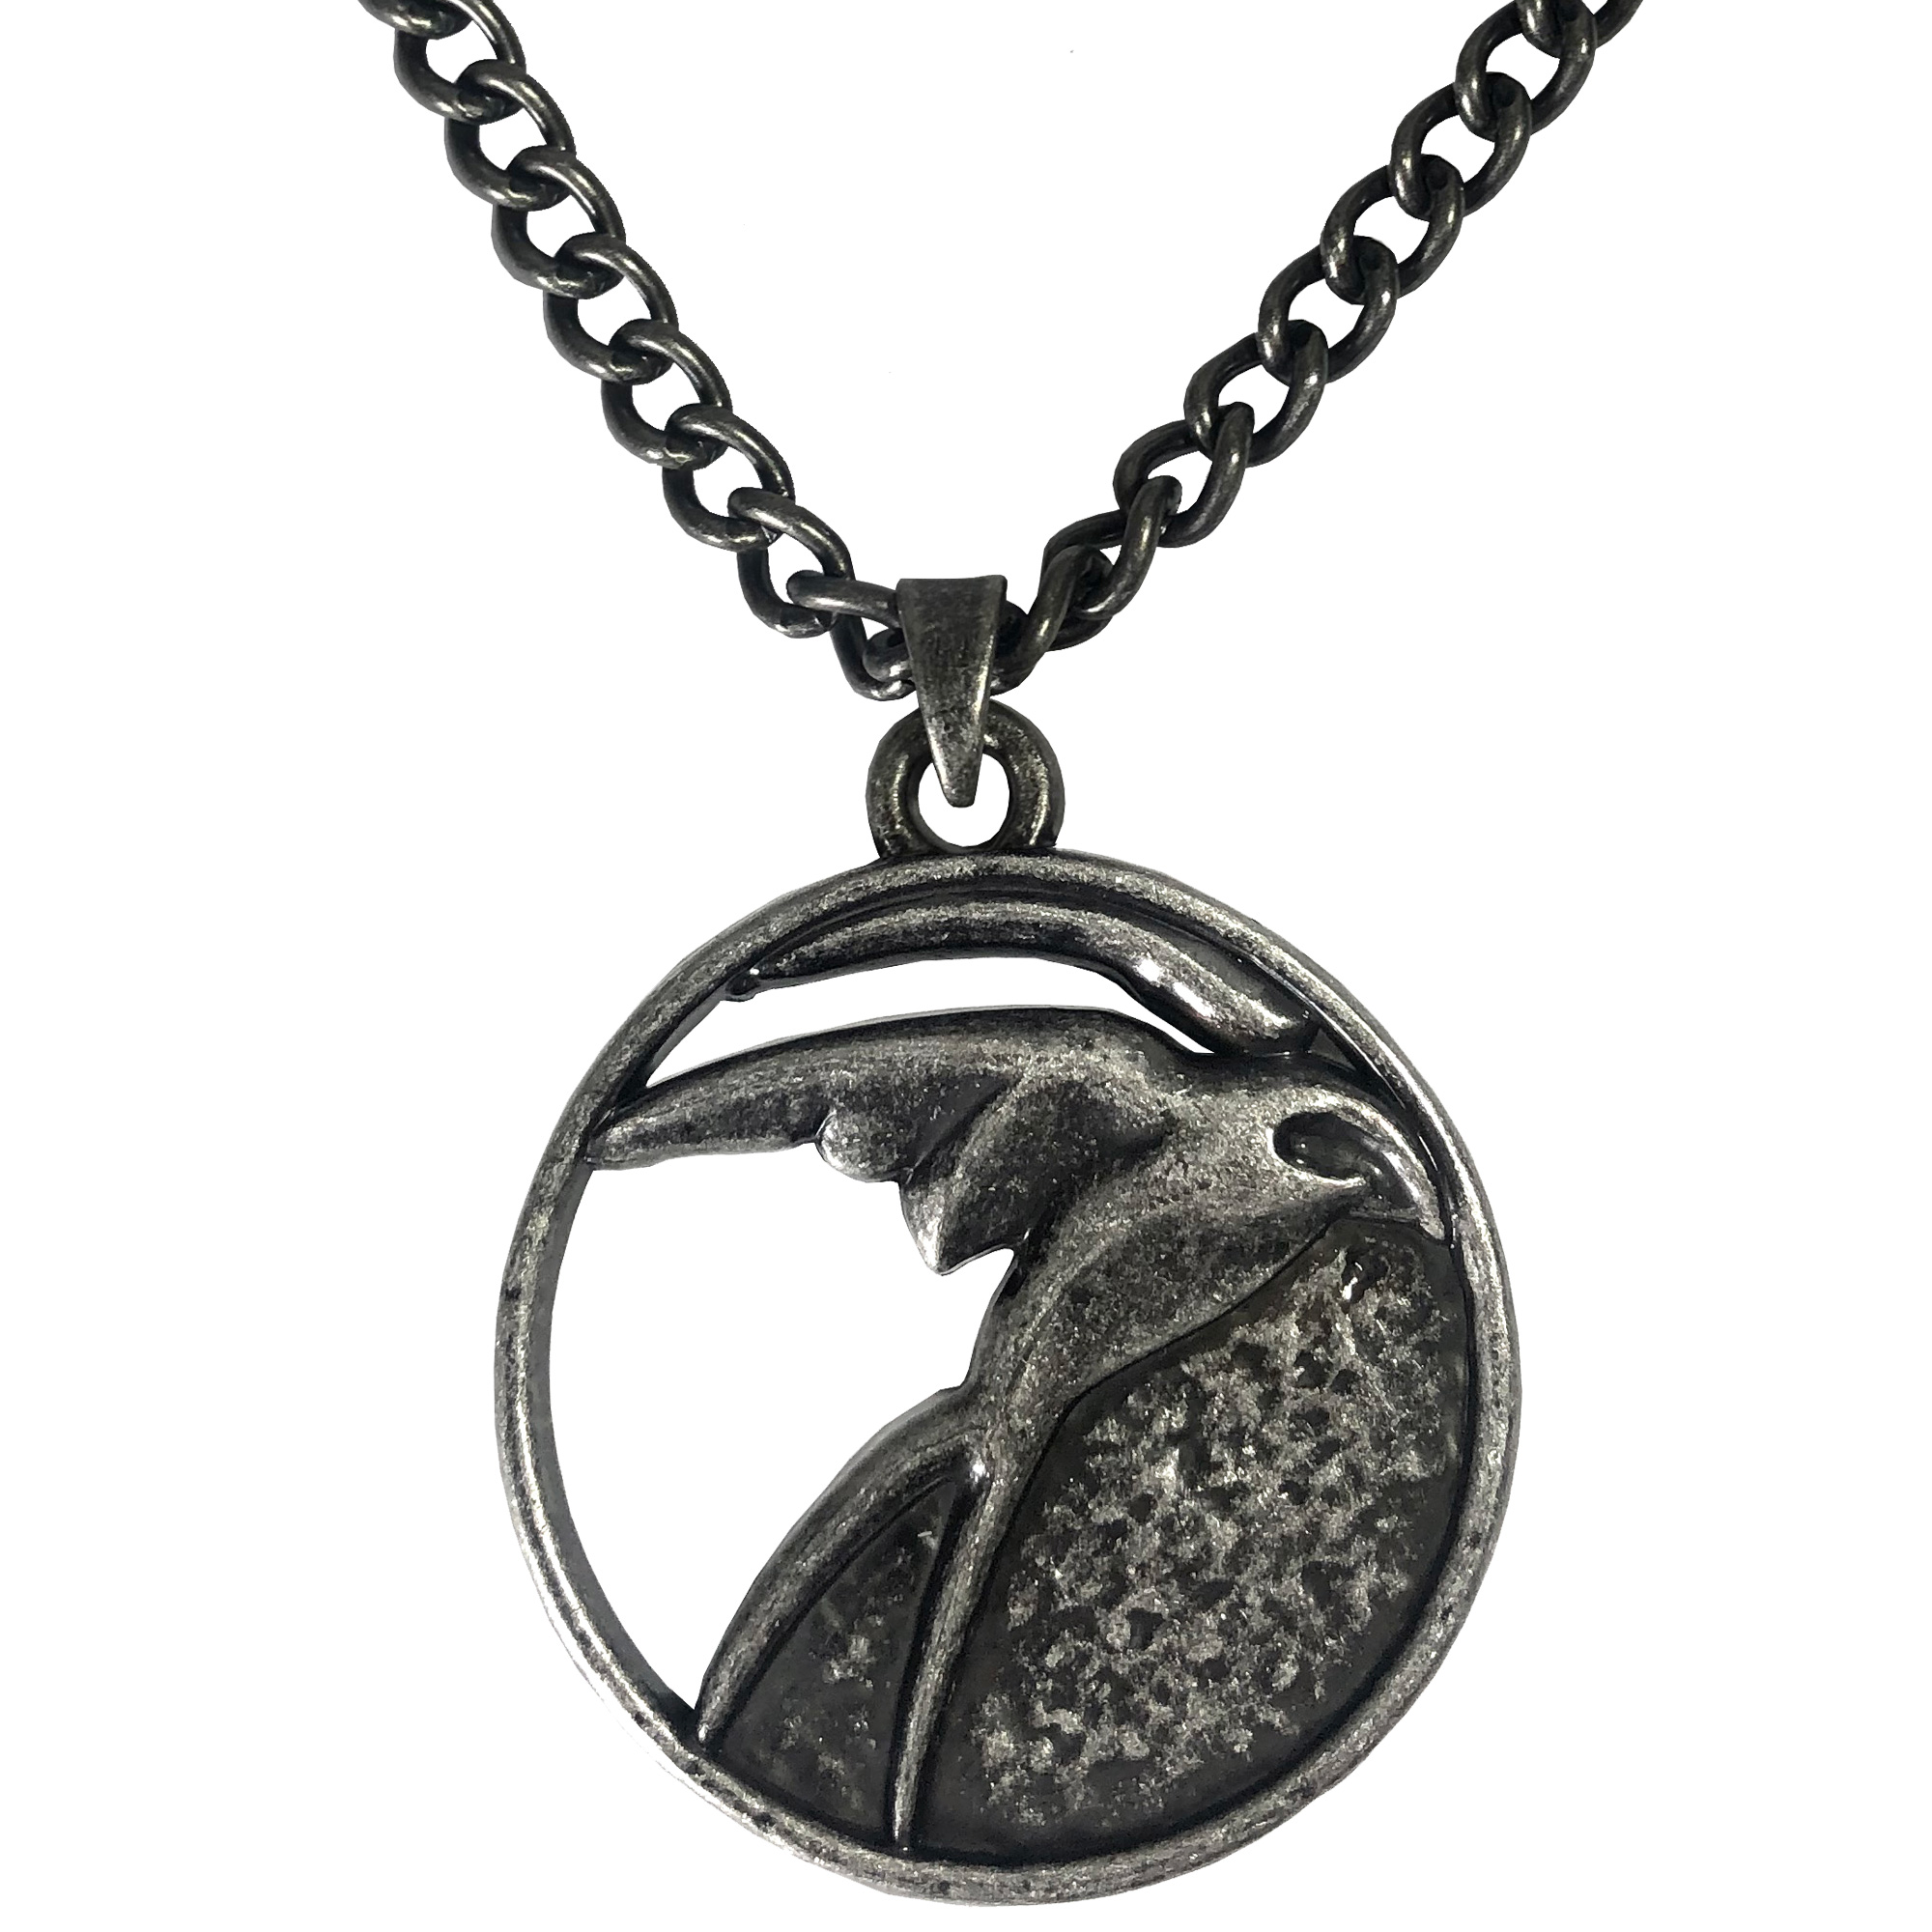 The Witcher Netflix Ciri Medallion Necklace - image 1 of 7